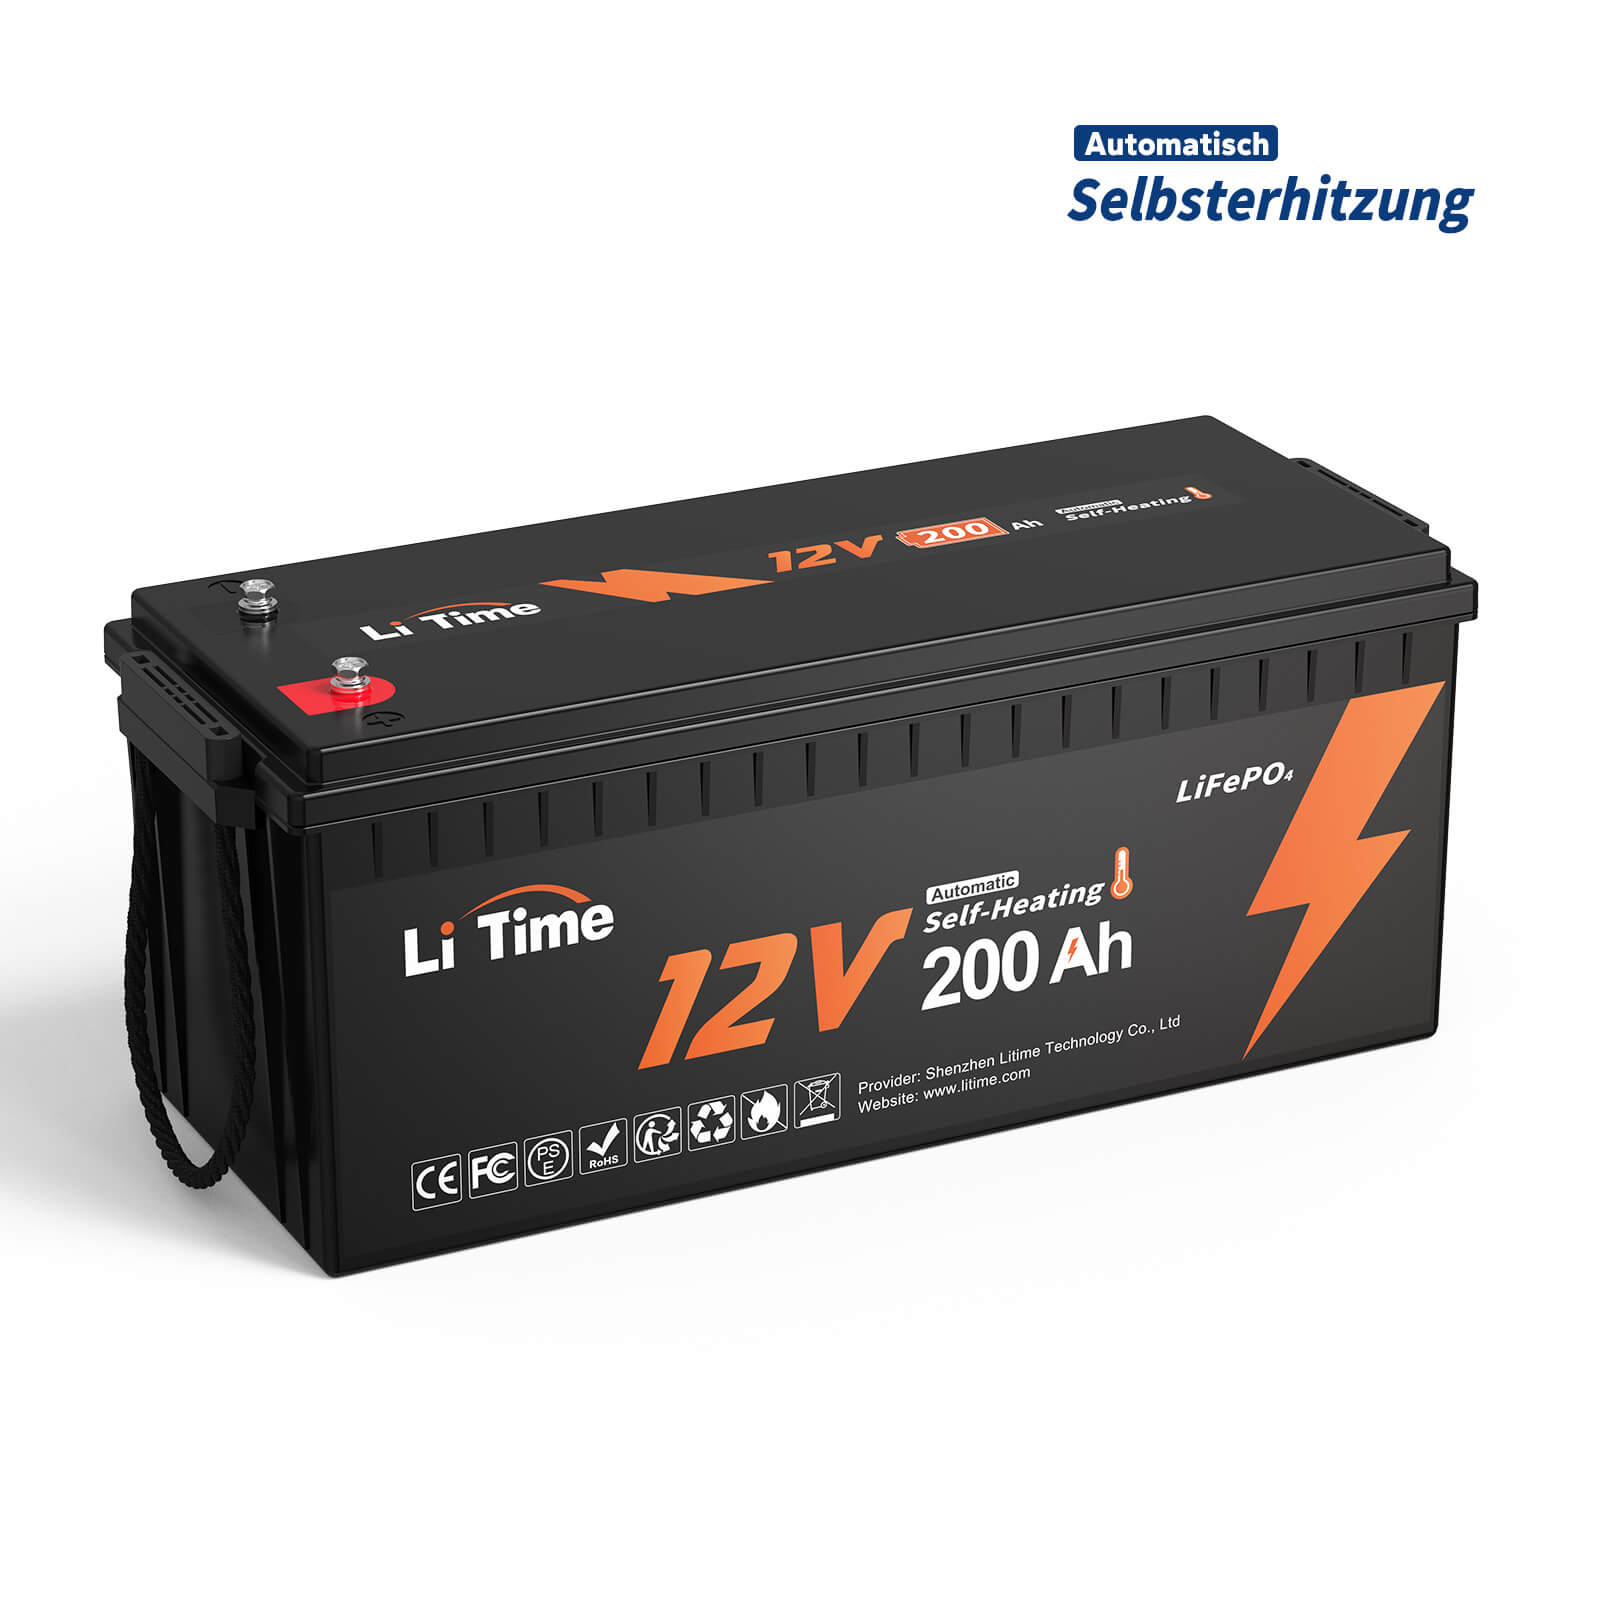 【0% IVA】Batería de litio LiFePO4 autocalentable LiTime de 12 V y 200 Ah con BMS de 100 A, admite carga a baja temperatura -20 °C